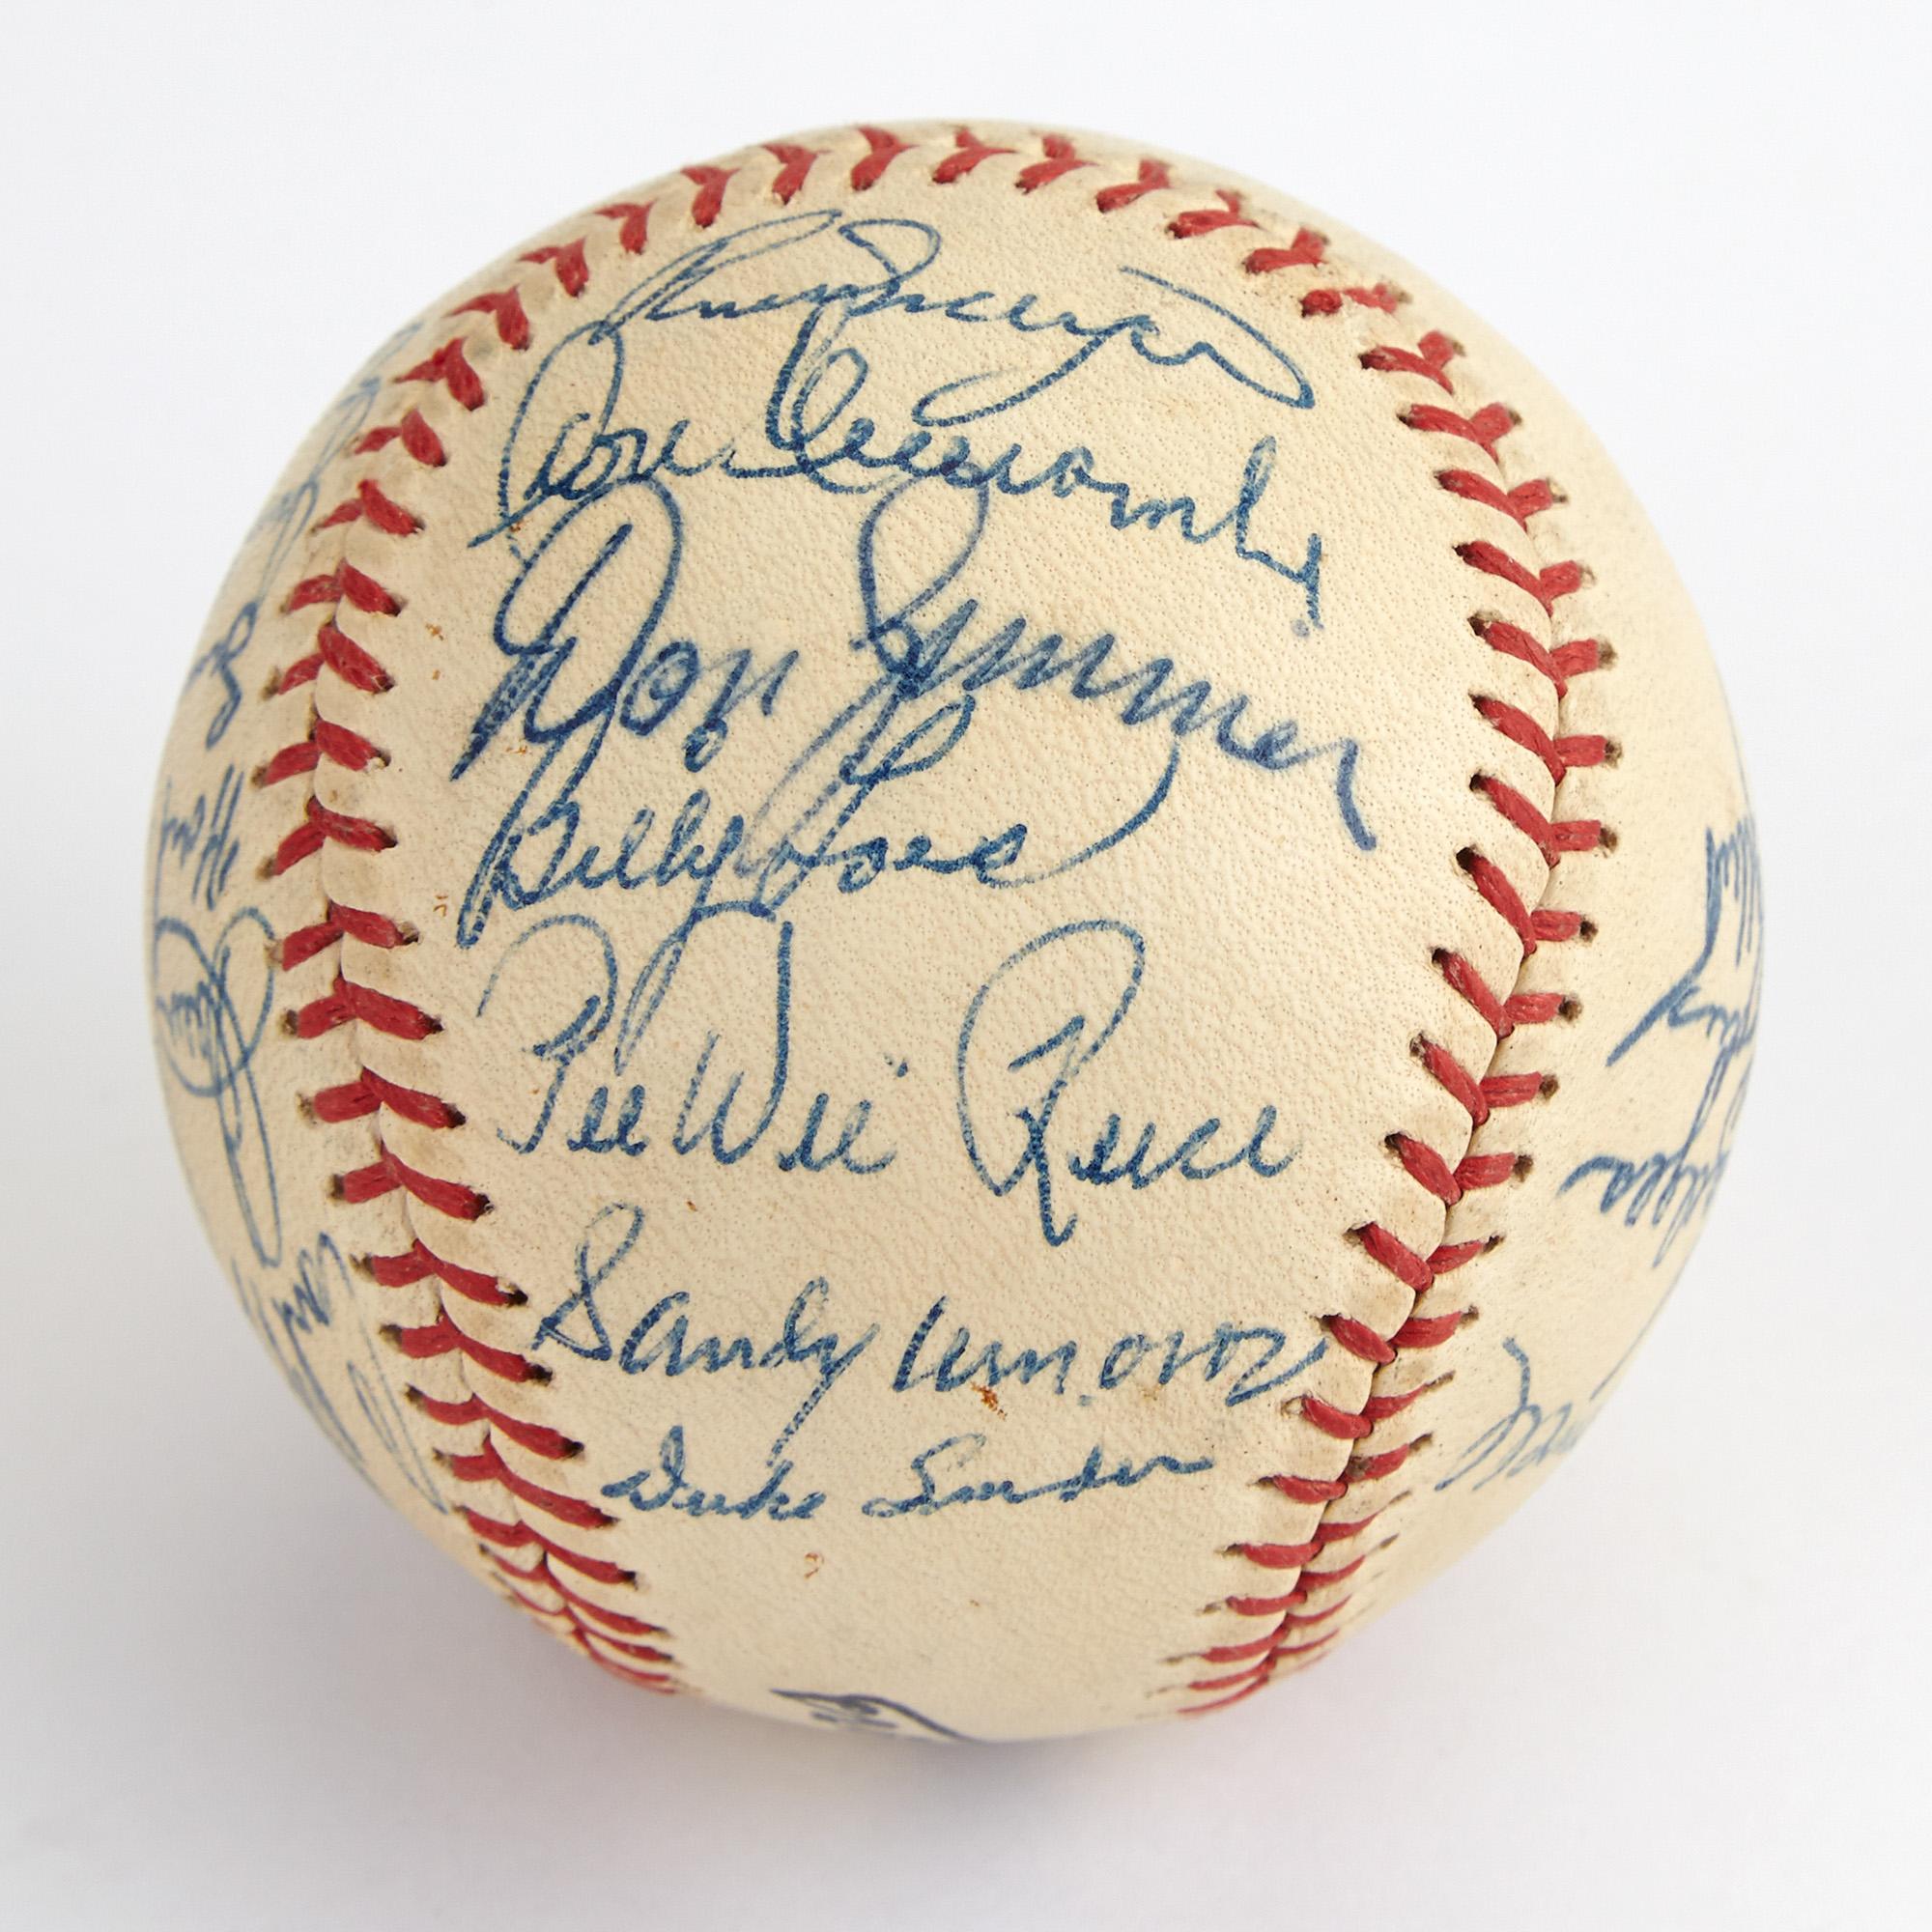 Don Newcombe Signed Baseball (JSA COA) 1955 Brooklyn Dodgers World